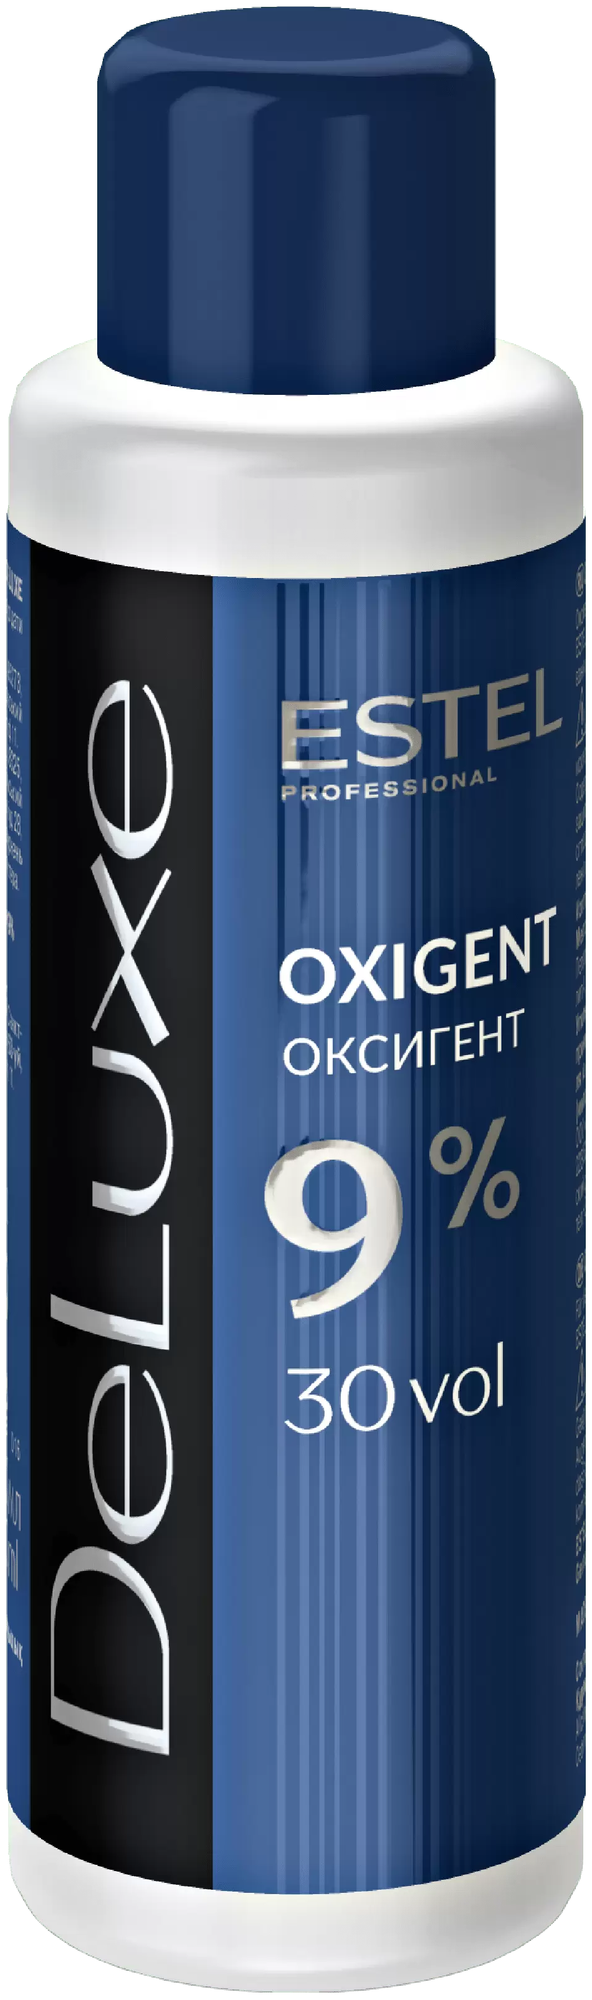 ESTEL Оксигент De Luxe 9 %, 60 мл